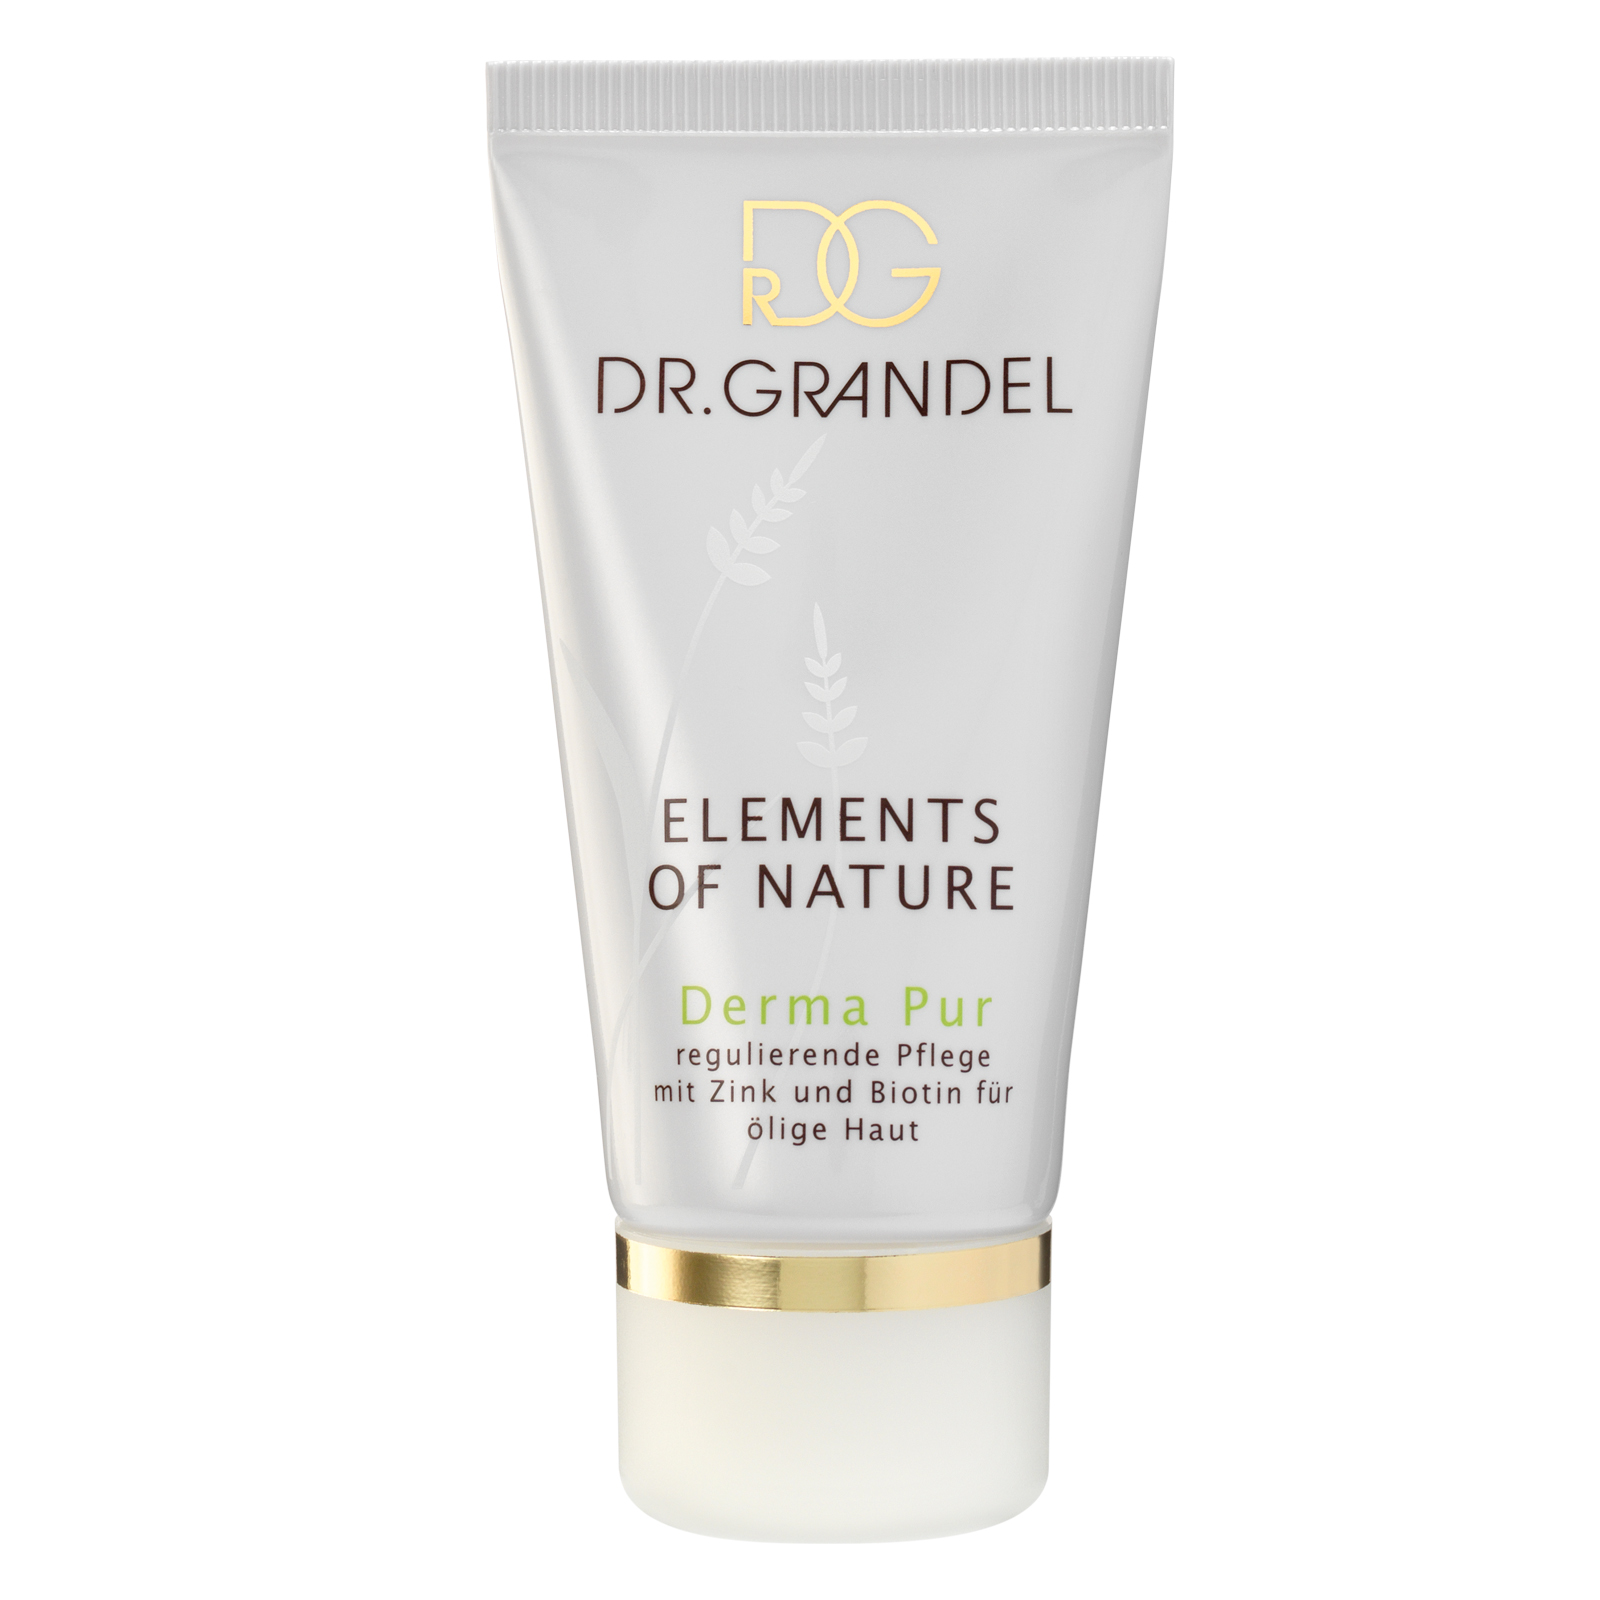 Dr. Grandel ELEMENTS OF NATURE Derma Pur 50 ml